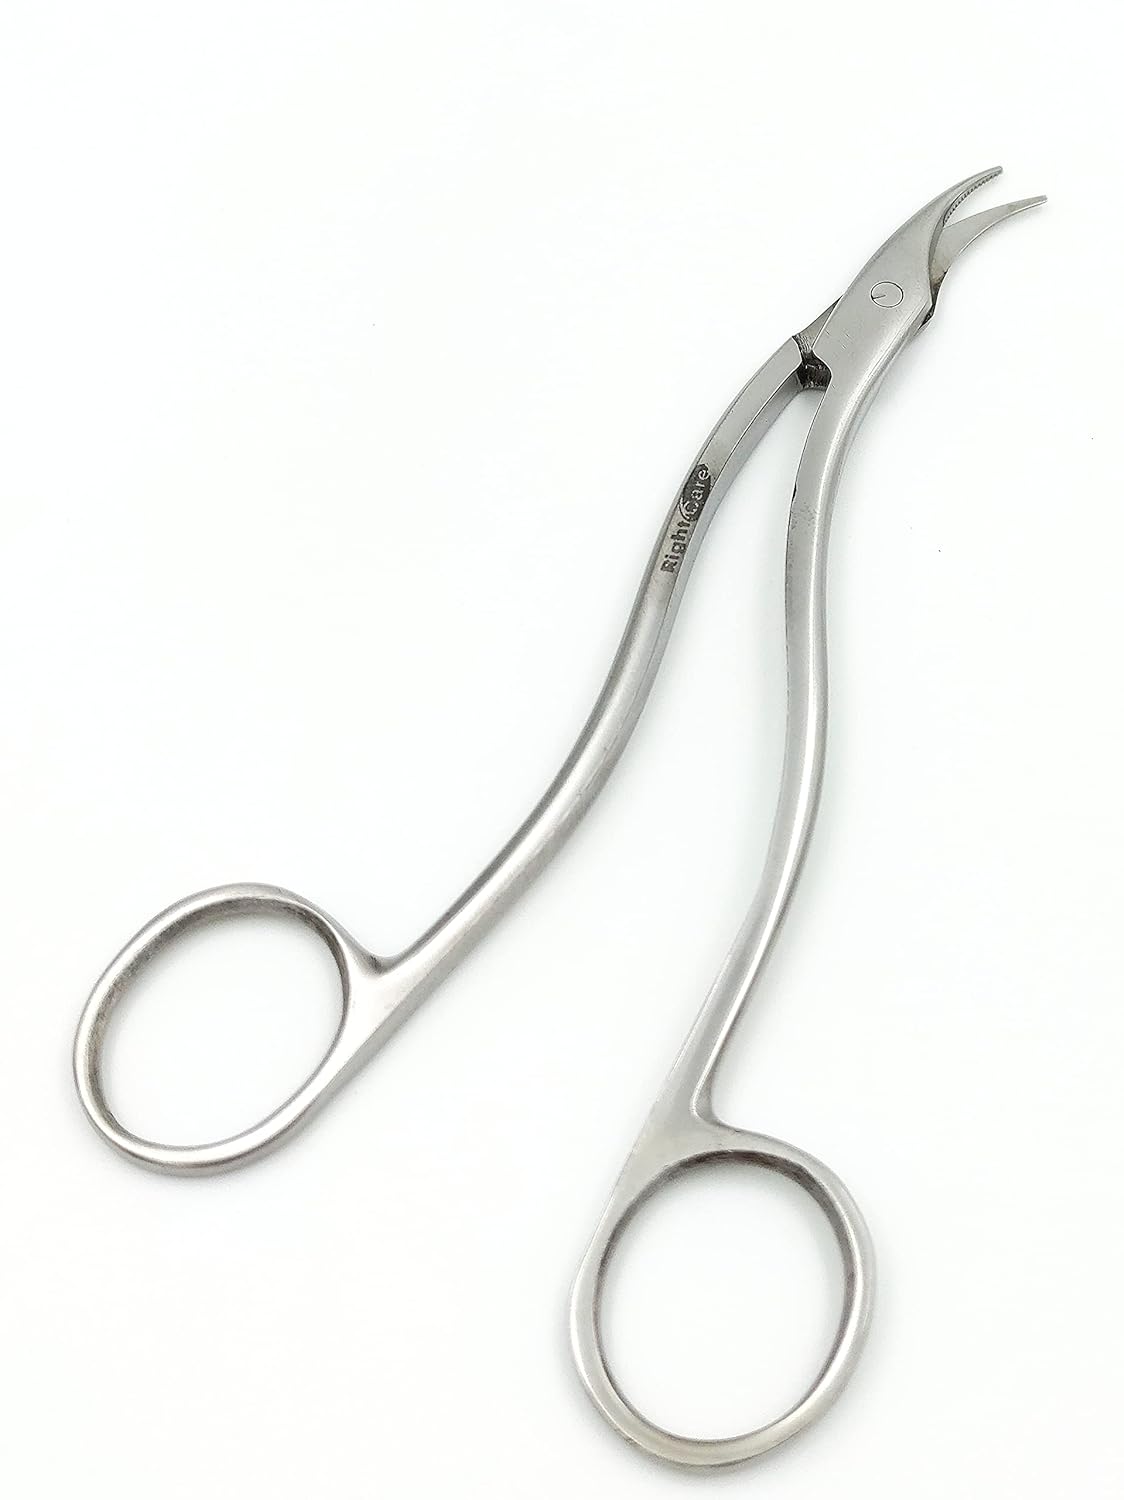 Surgical Suture Cutting Scissors (6 Inch)